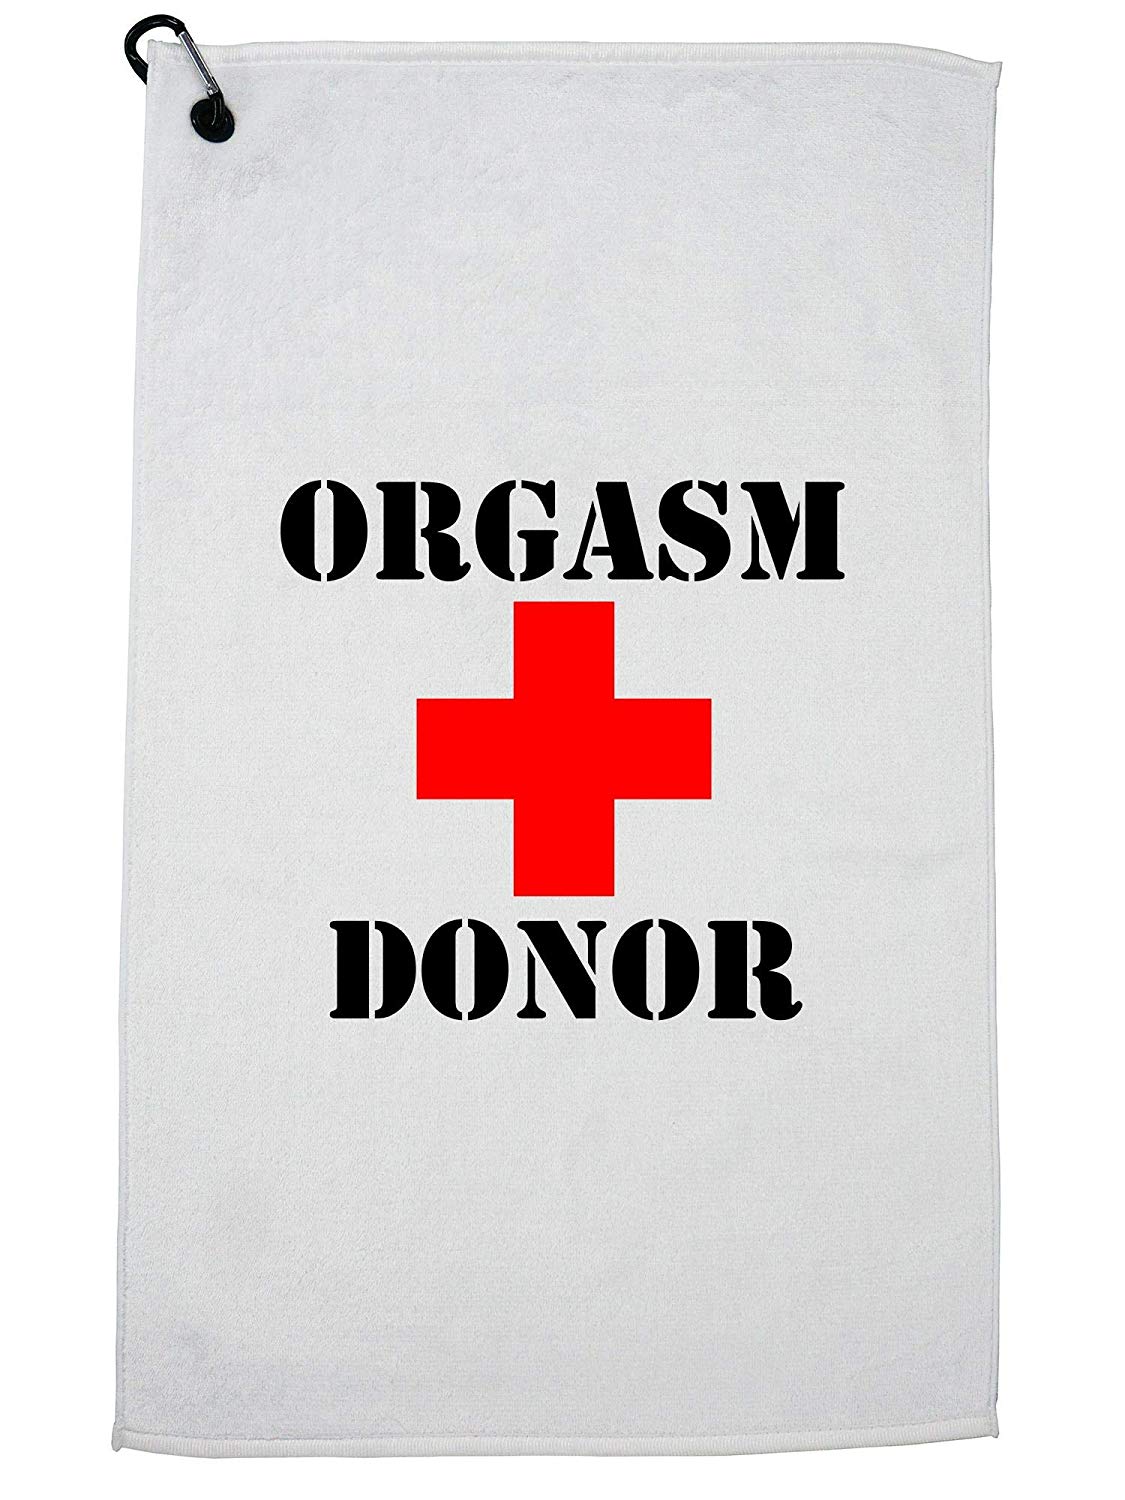 Red Cross Lifeguard Logo - Amazon.com : Hollywood Thread Orgasm Donor - Lifeguard Red Cross ...